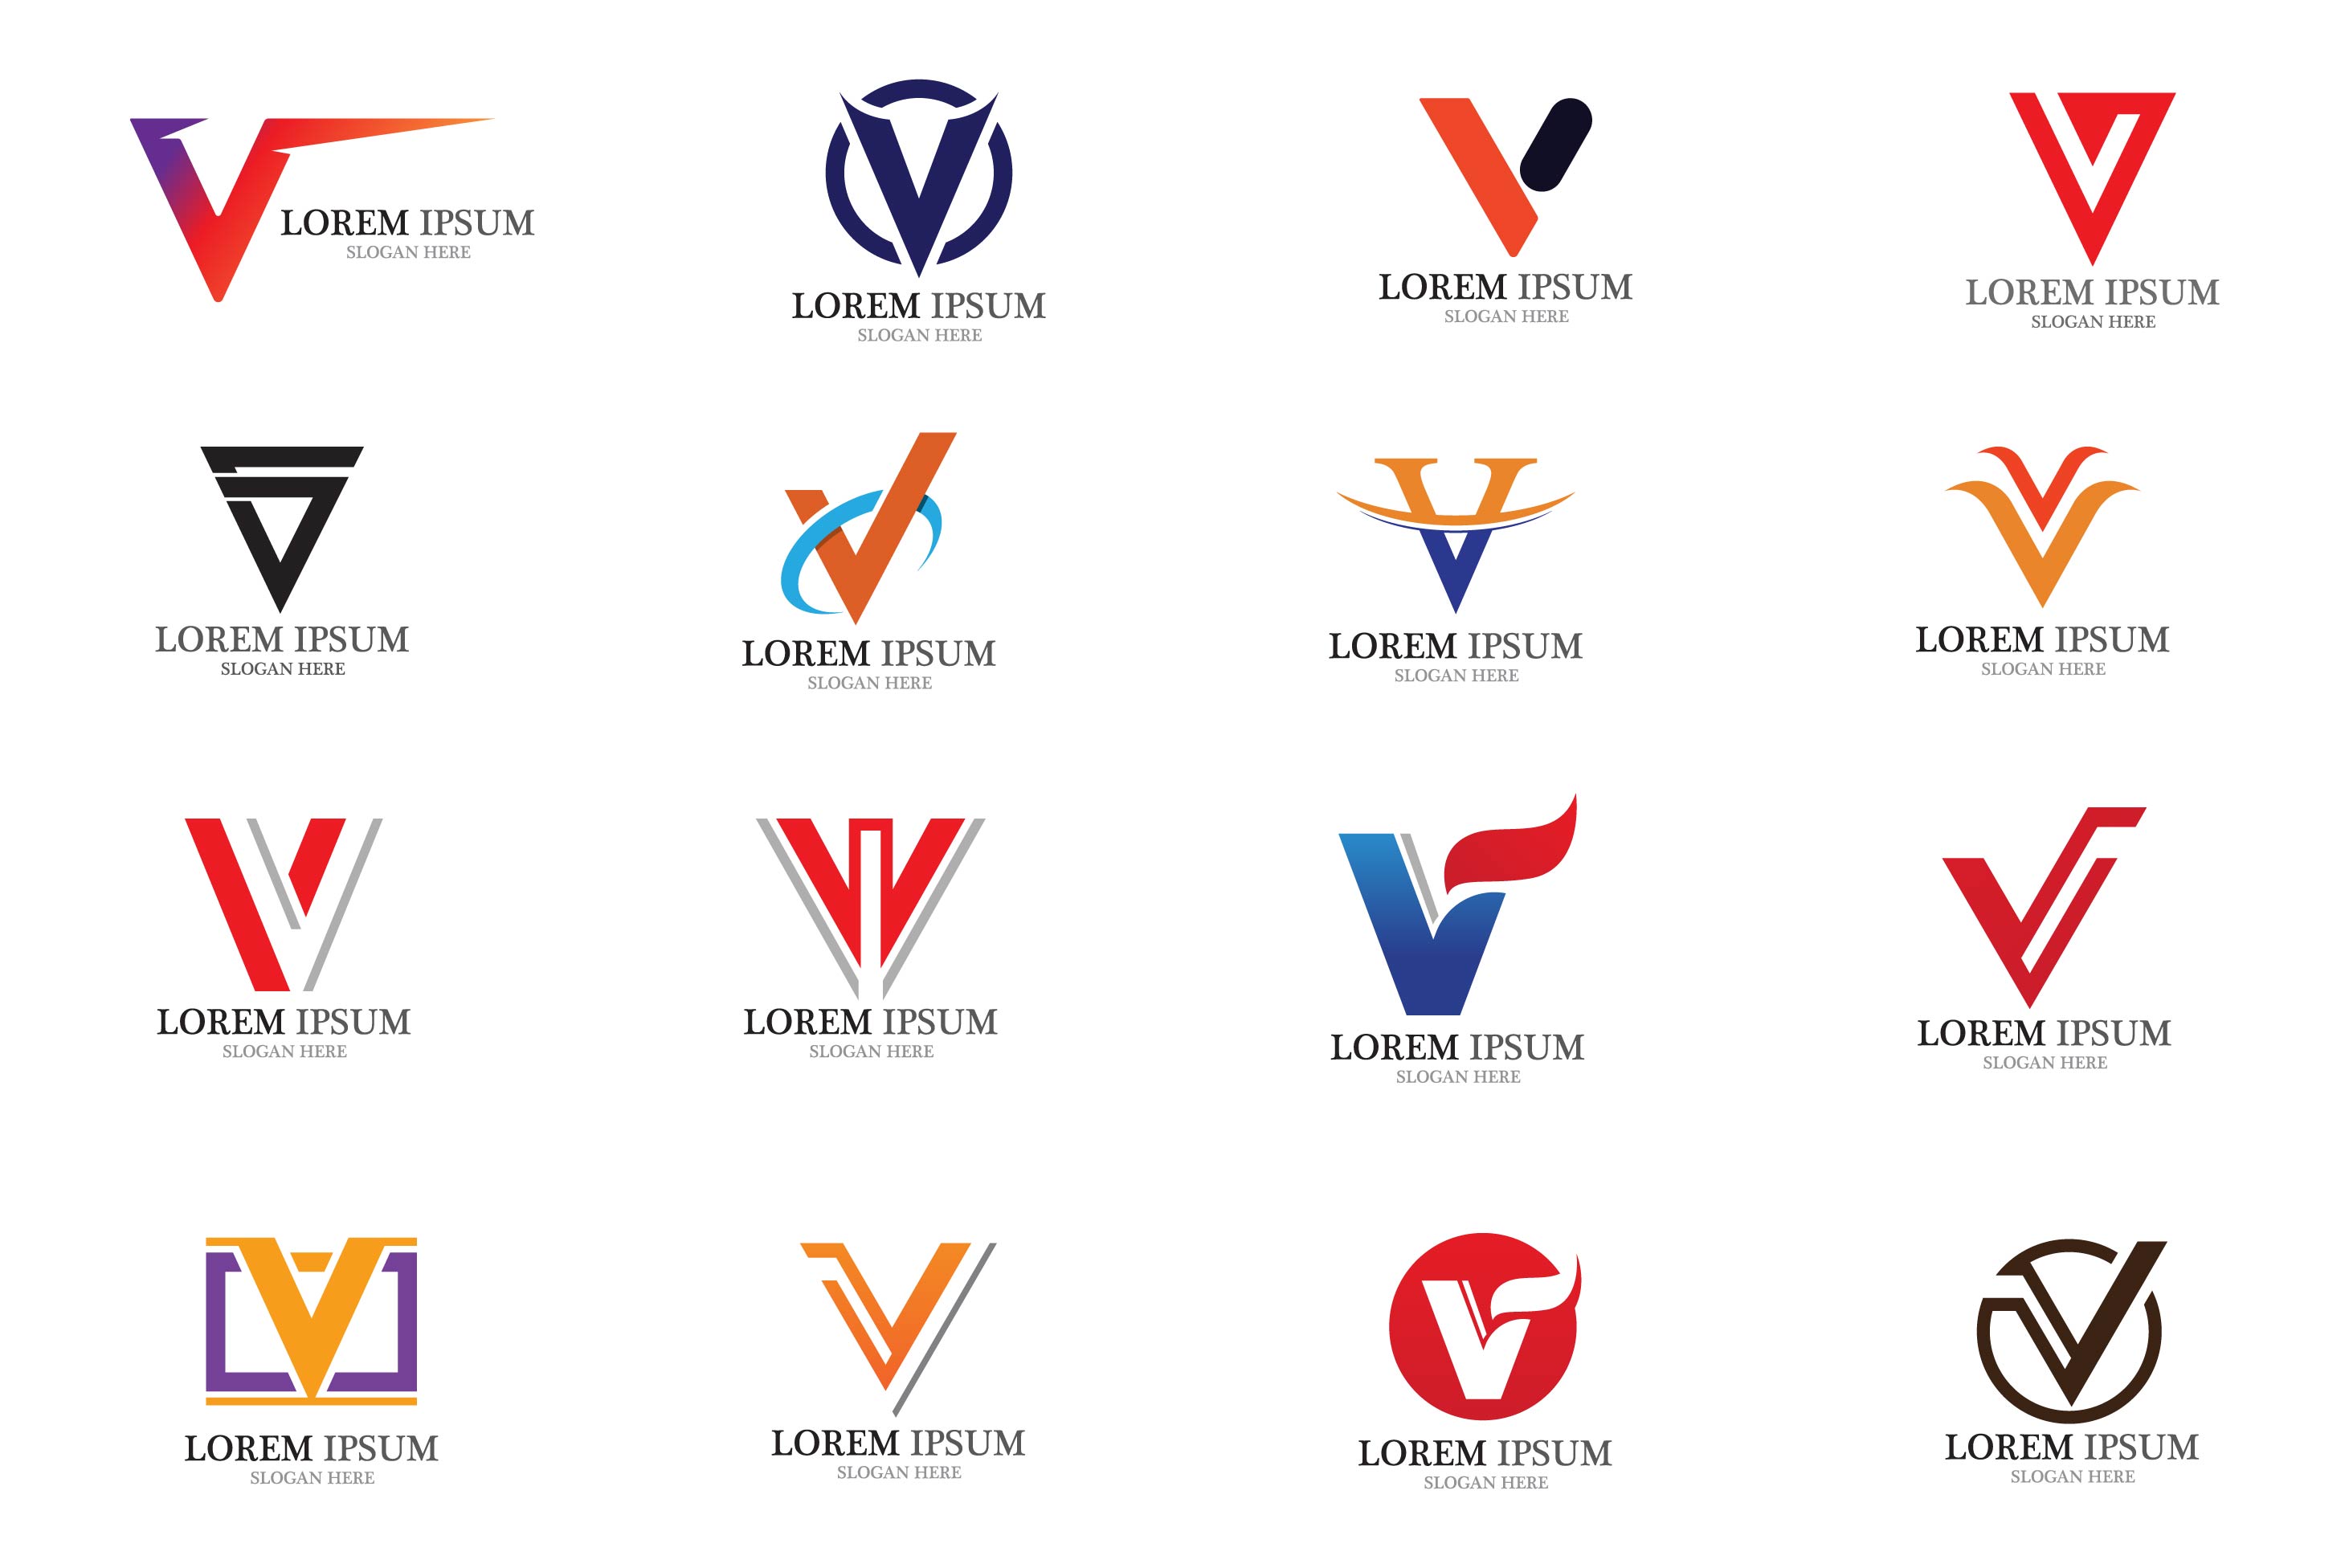 V logo and symbol letter business cover image.